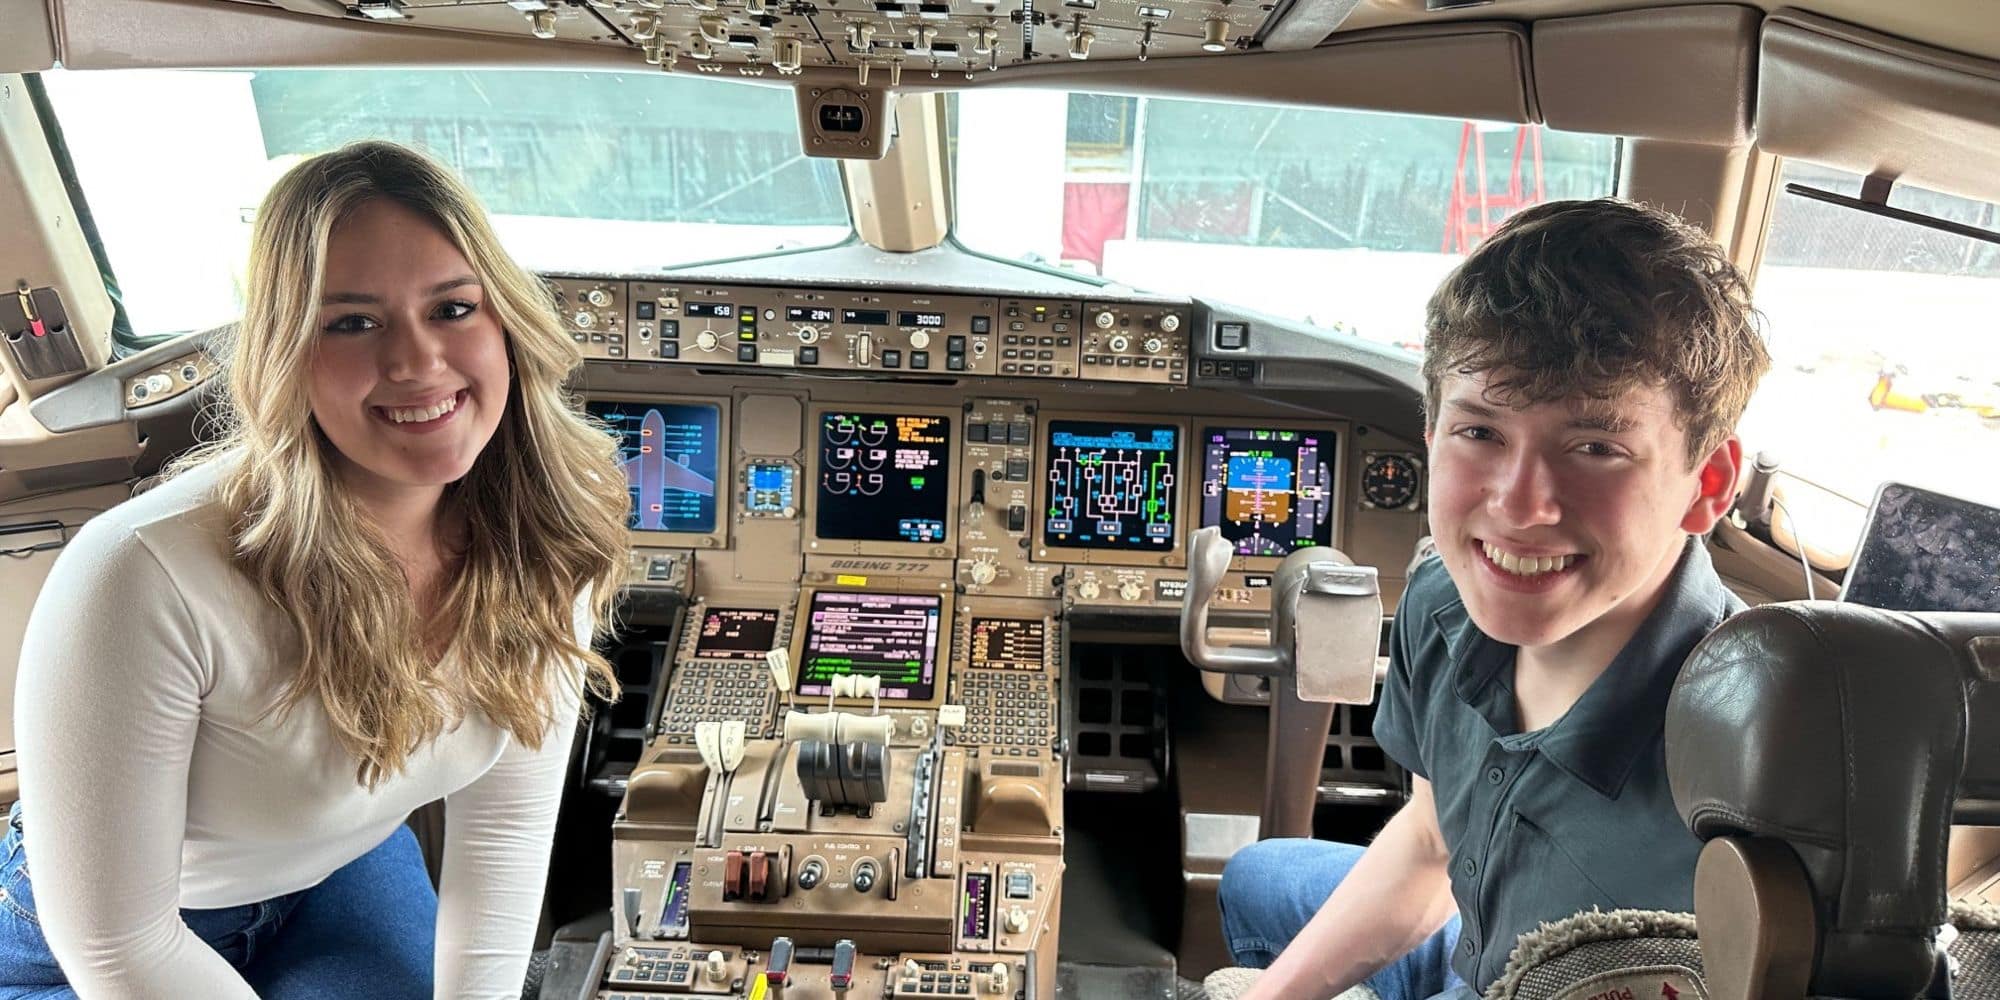 Michelle and Christian Tabor study Aeronautics at Embry-Riddle Aeronautical University.